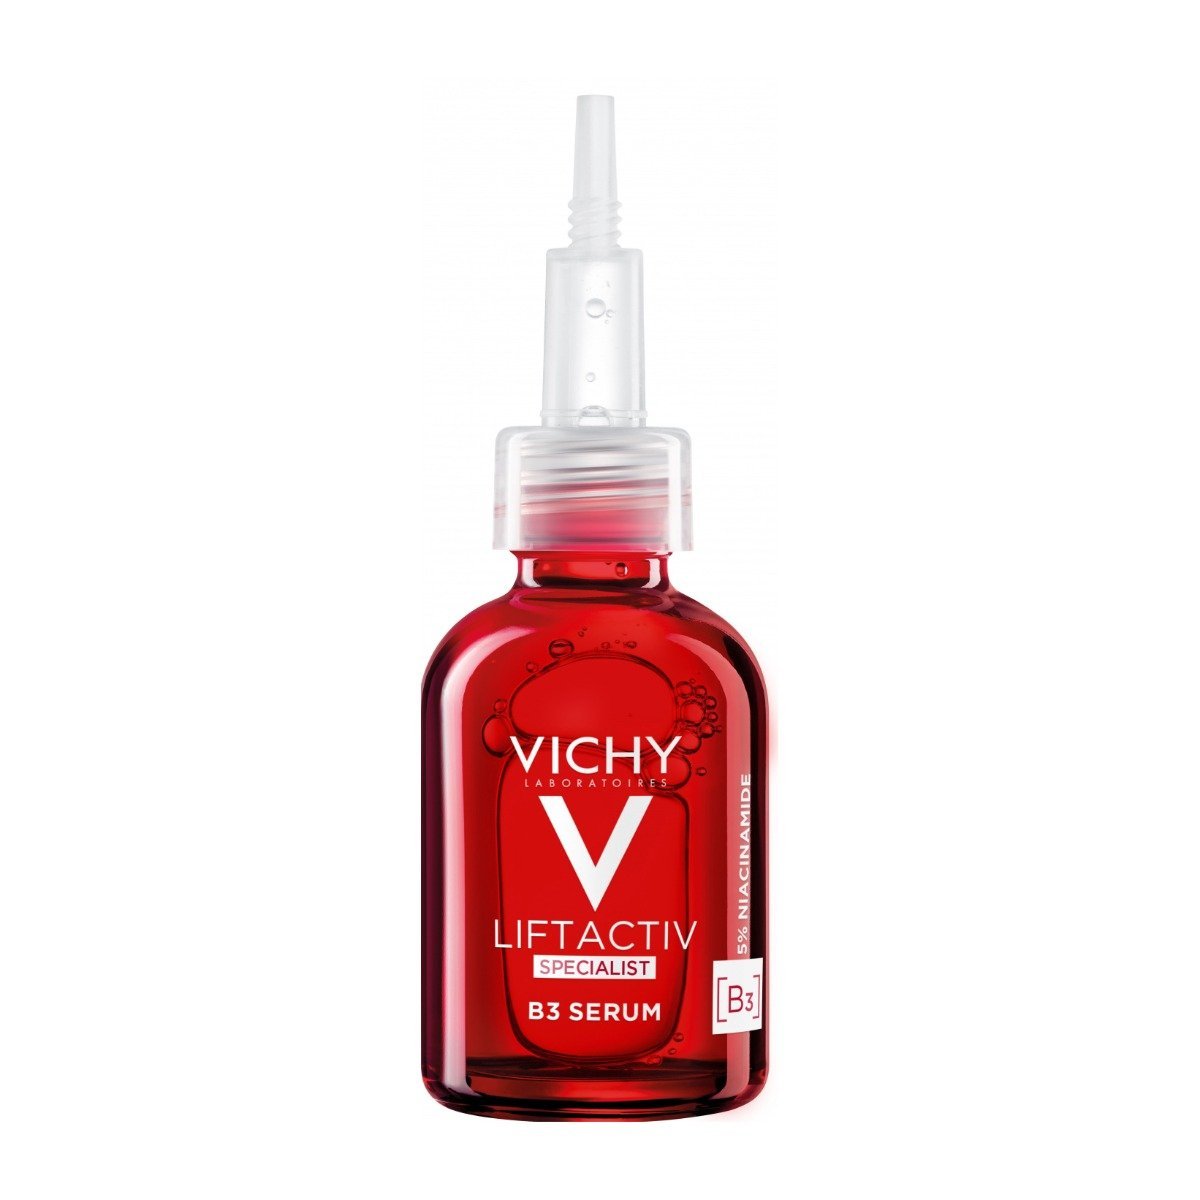 Vichy Liftactiv B3 Serum Dark Spots & Wrinkles Serum - 30ml - Bloom Pharmacy